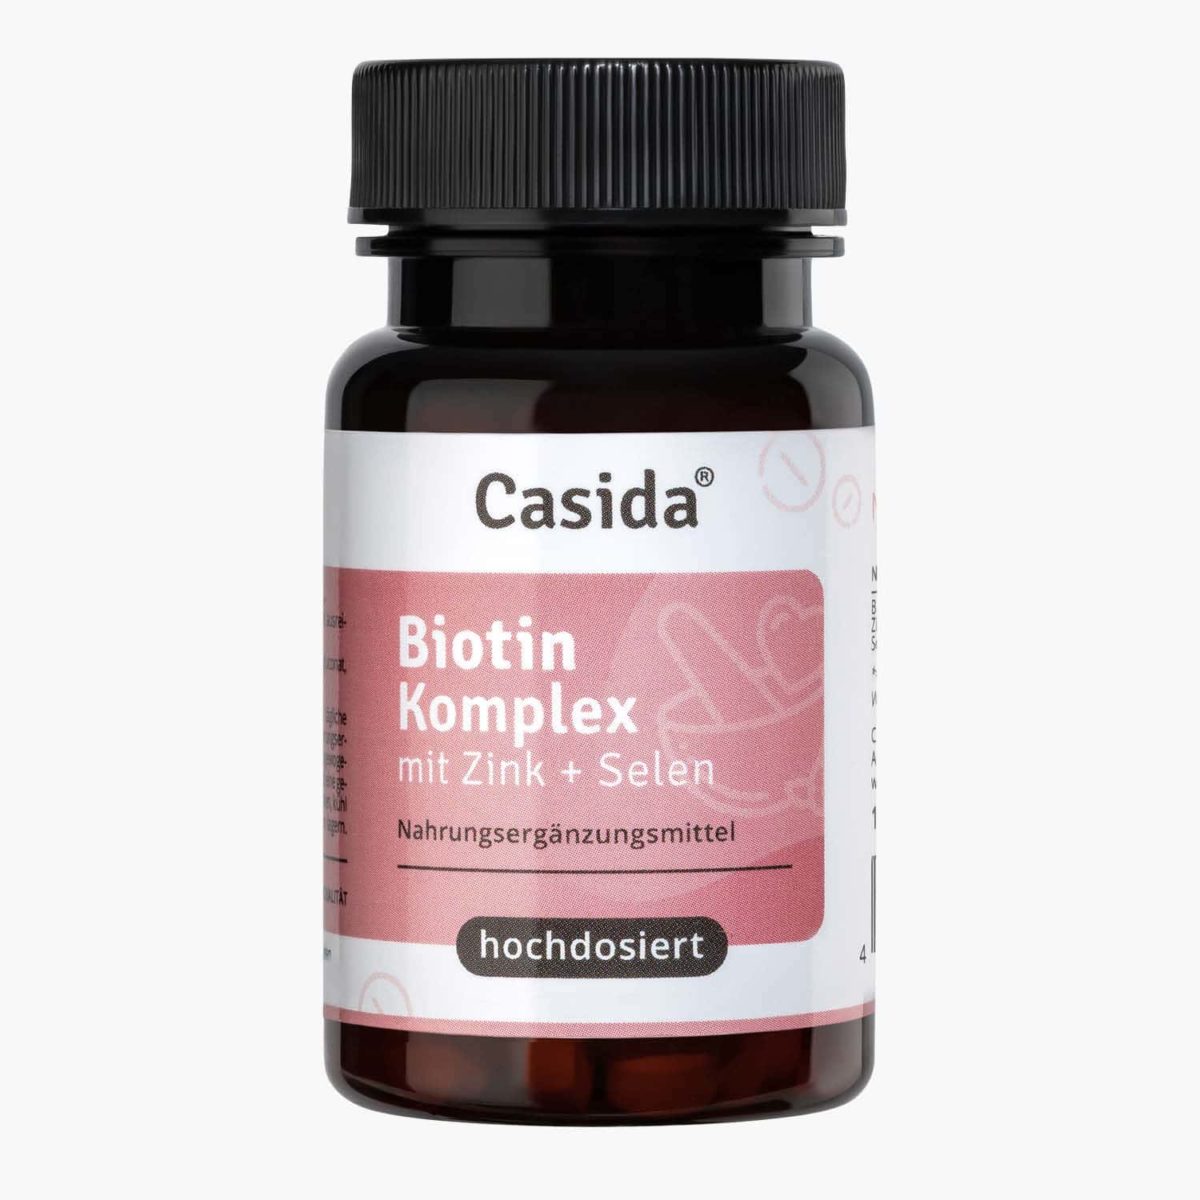 Casida Biotin Komplex - 10 mg 17295608 PZN Apotheke EAN 4260518460970 Haarpflege Schwangerschaft Vitalstoffe schöne Haut